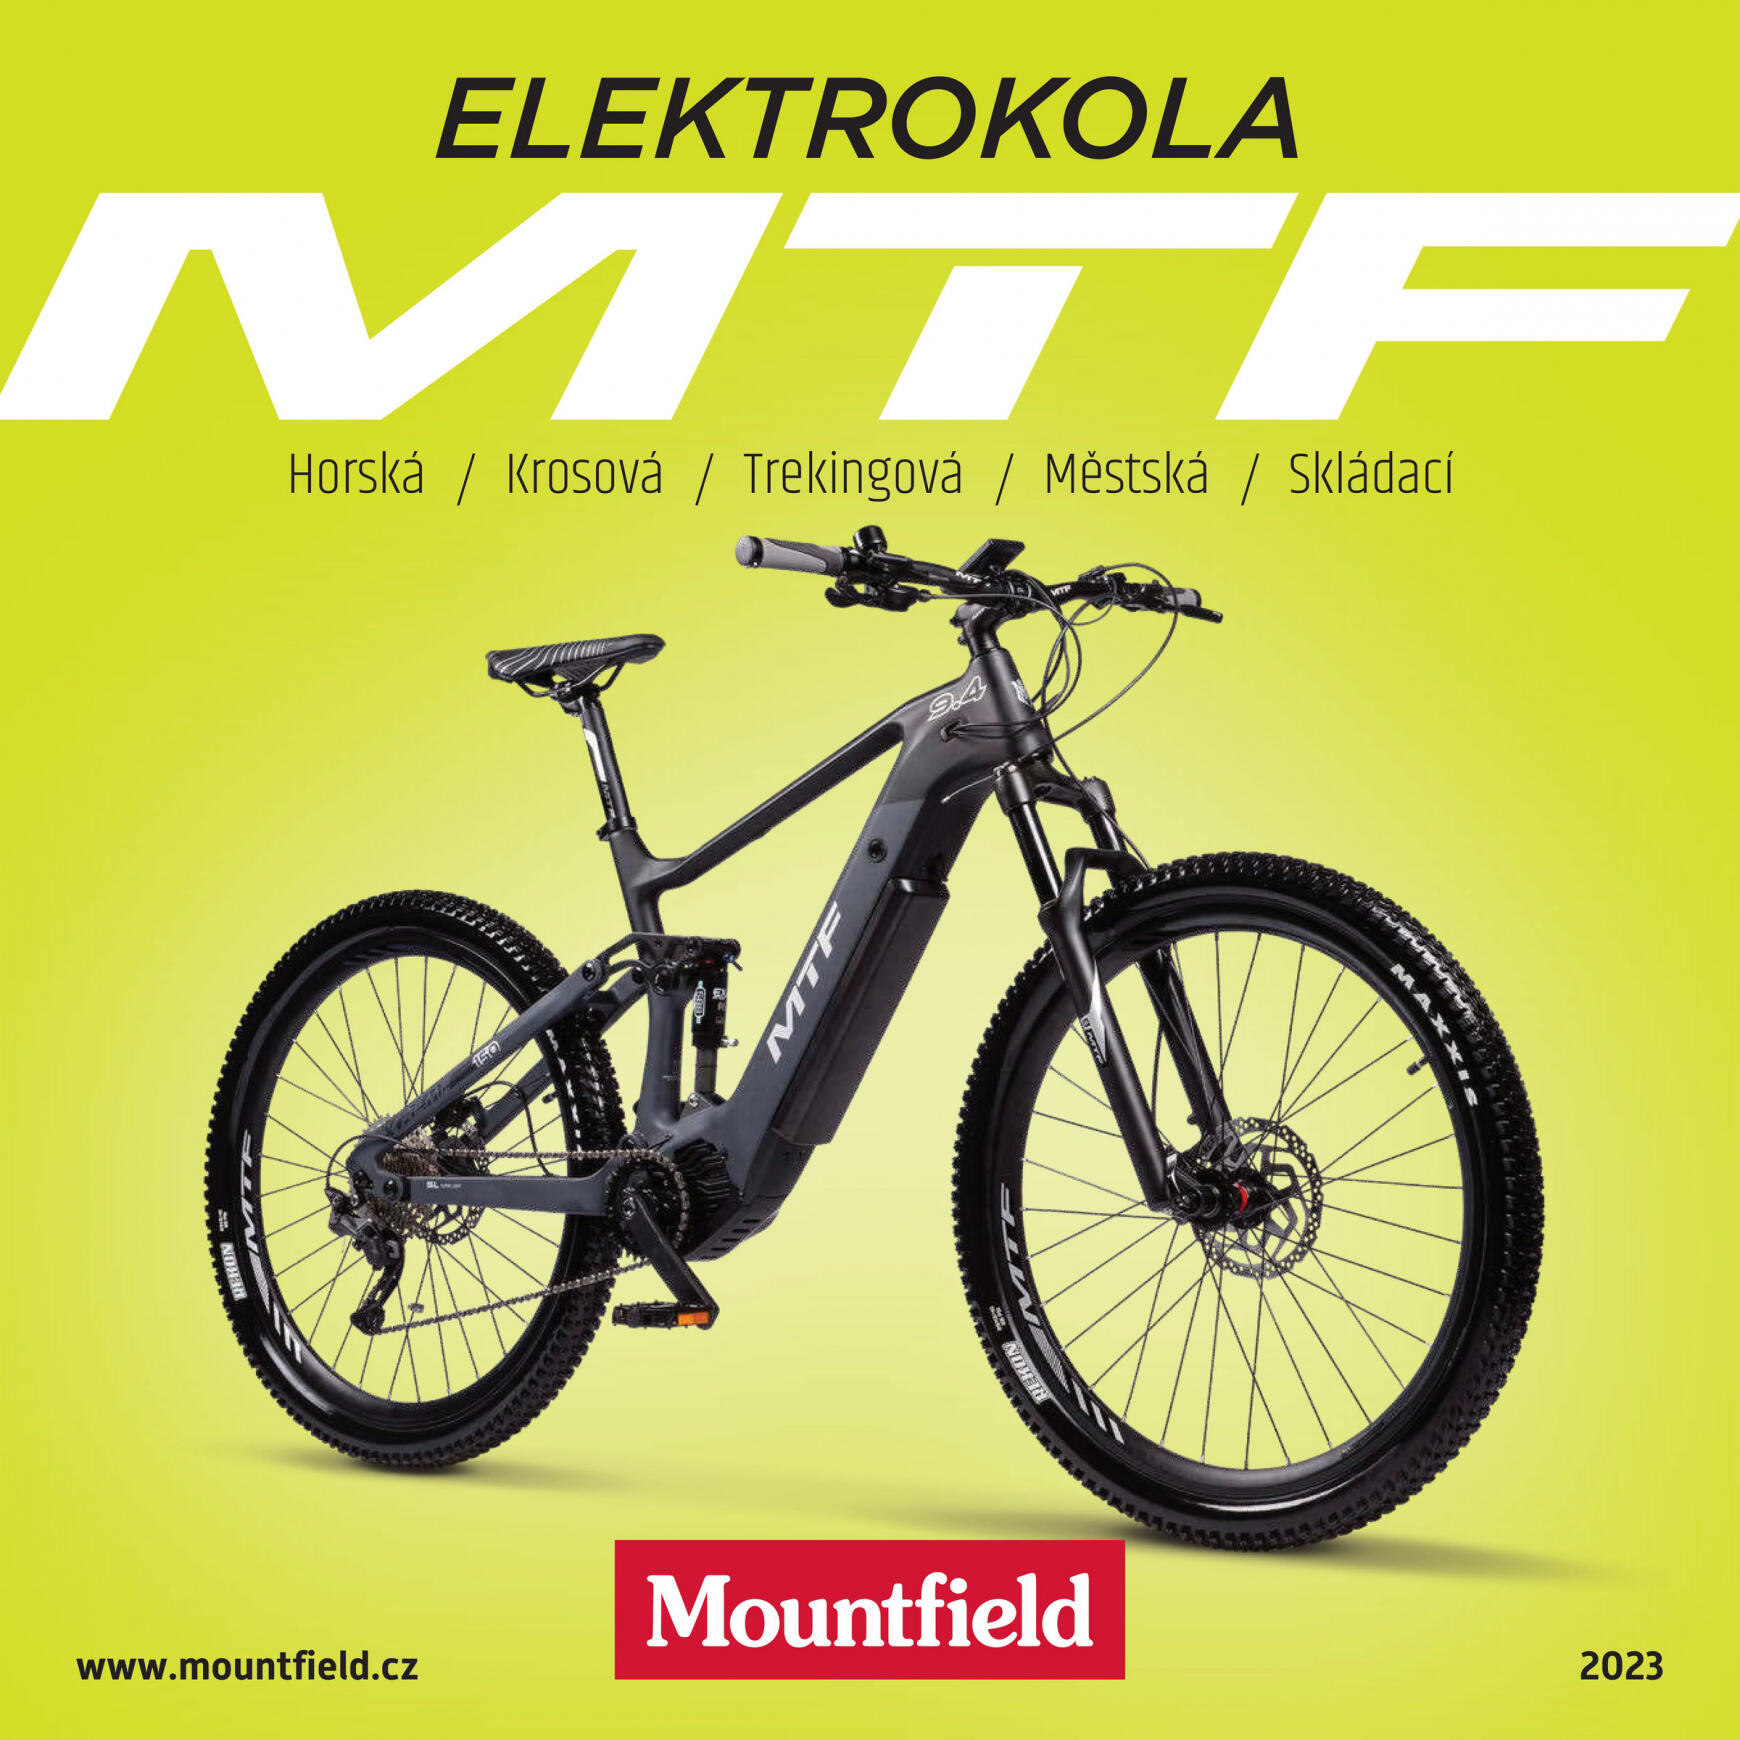 mountfield - Mountfield - Katalog elektrokol platný od 12.04.2023